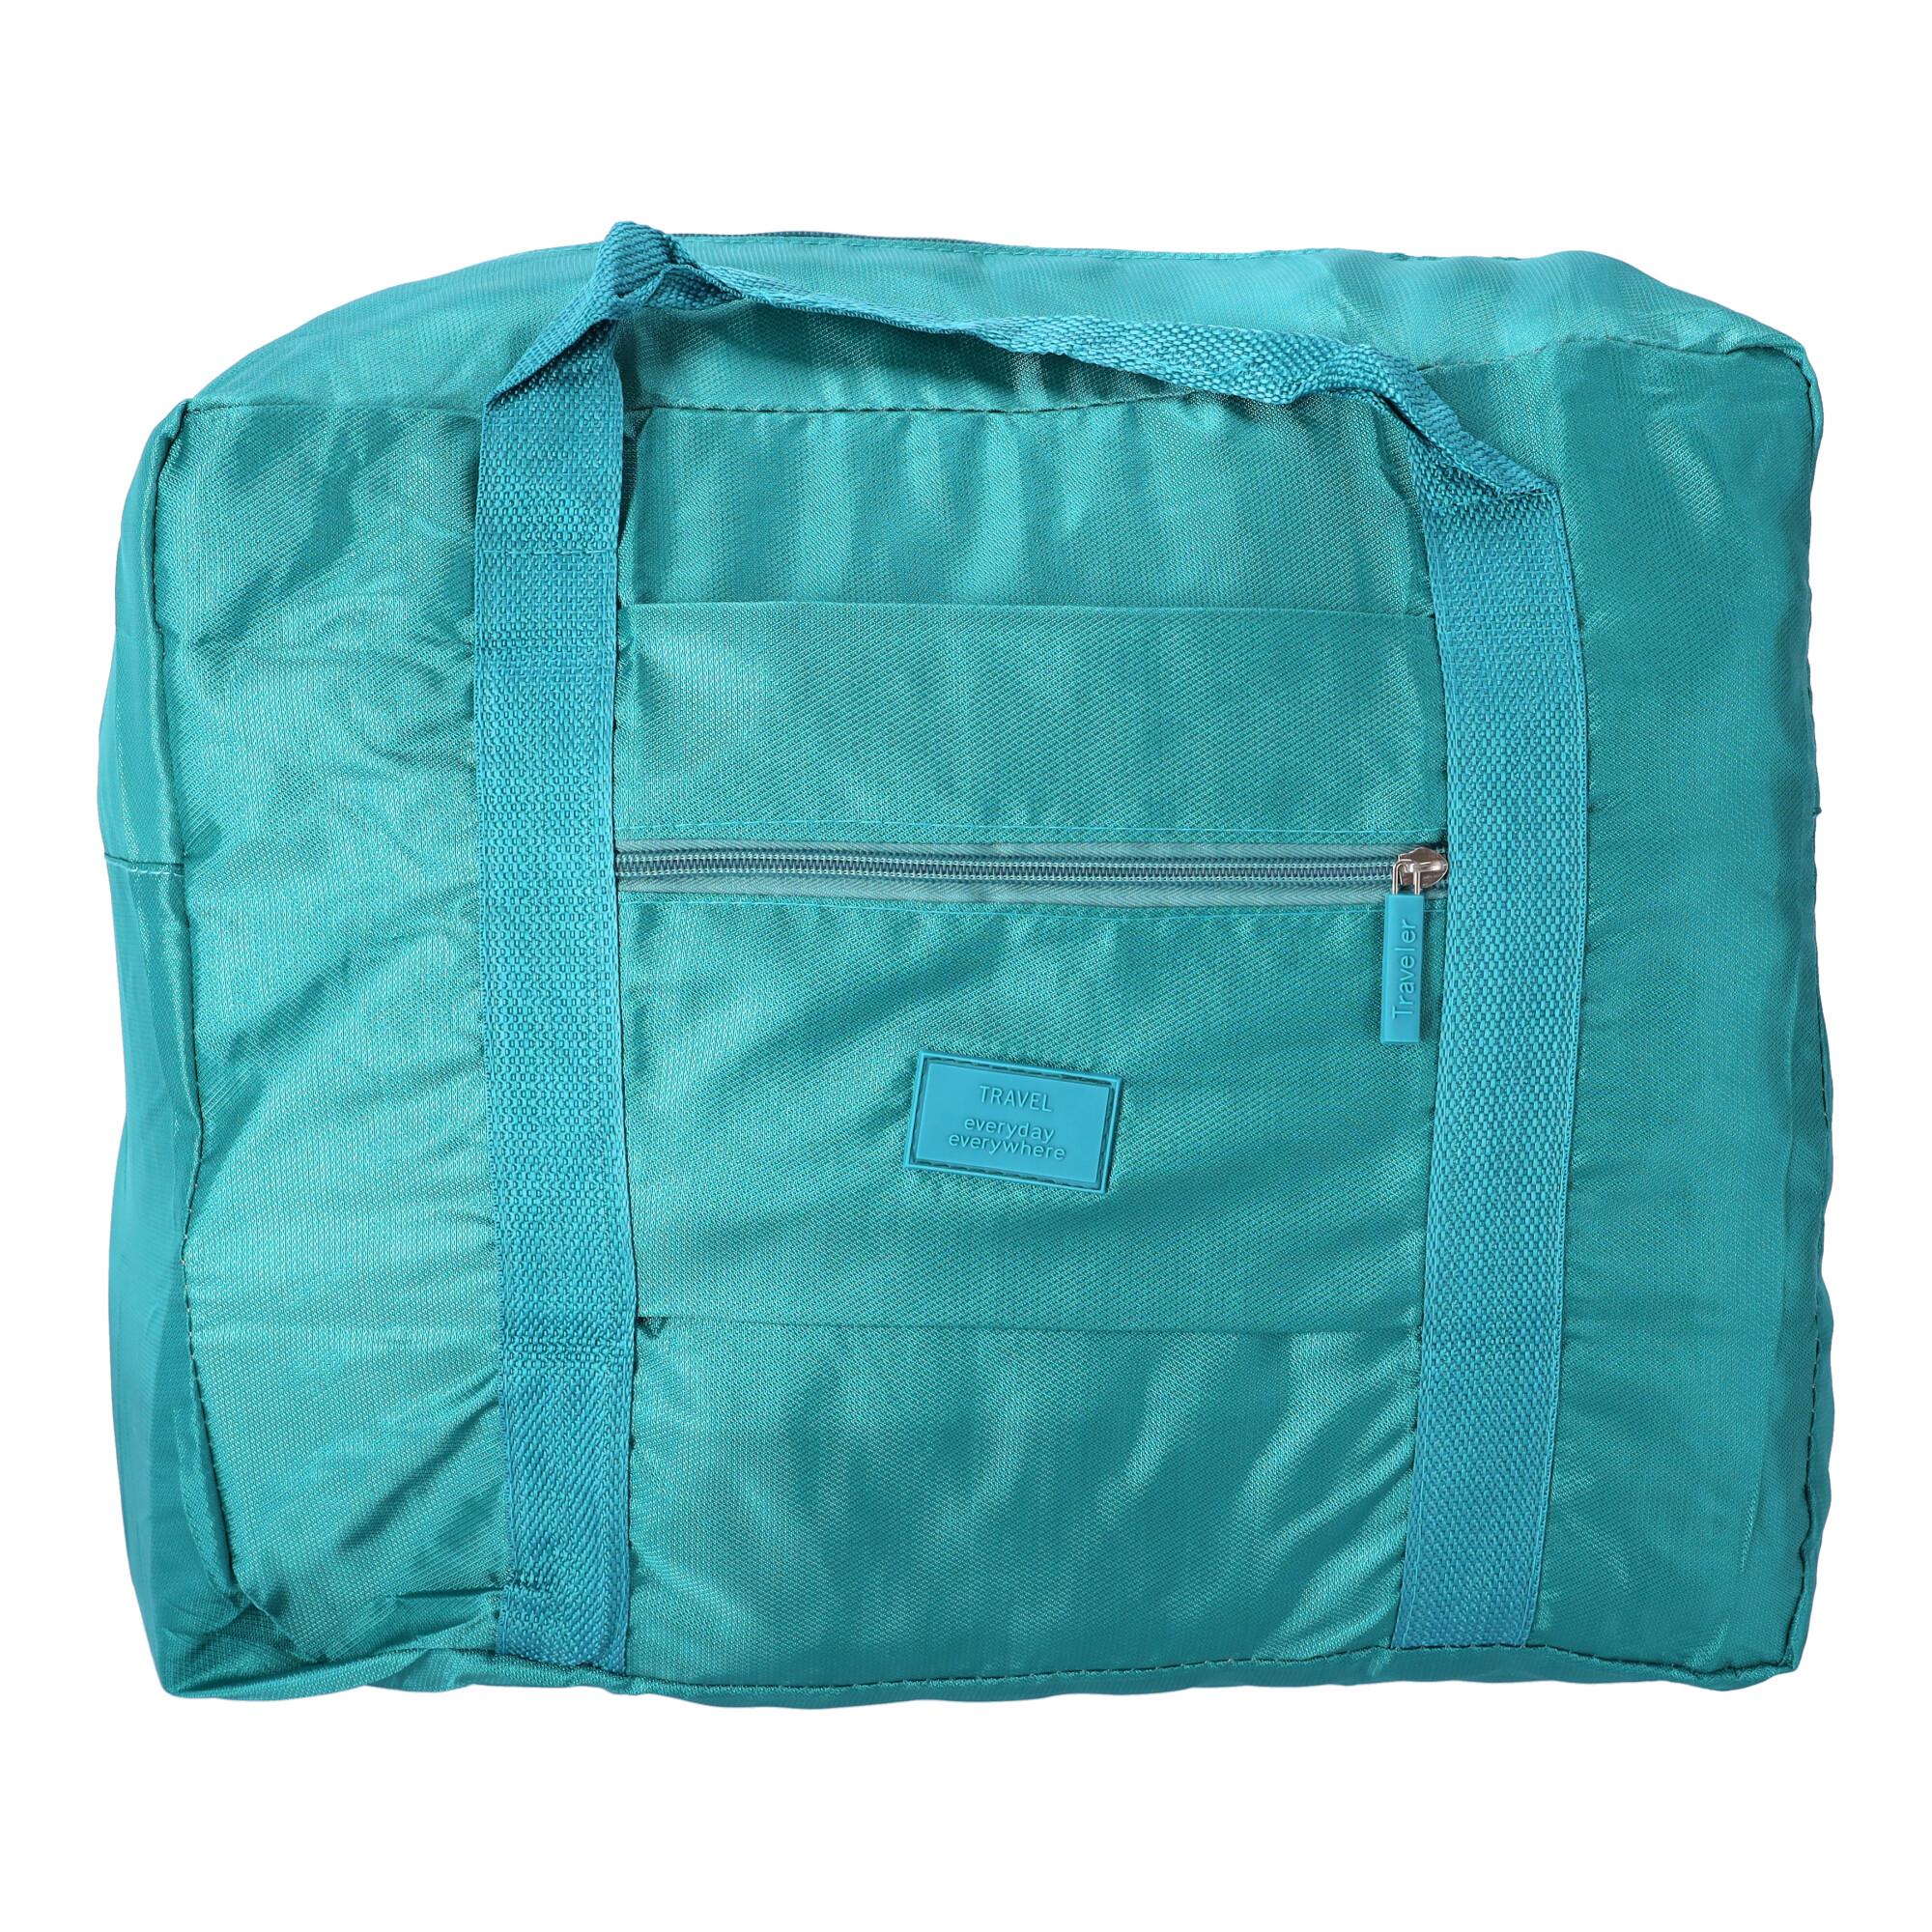 Classic travel, sports bag - light blue